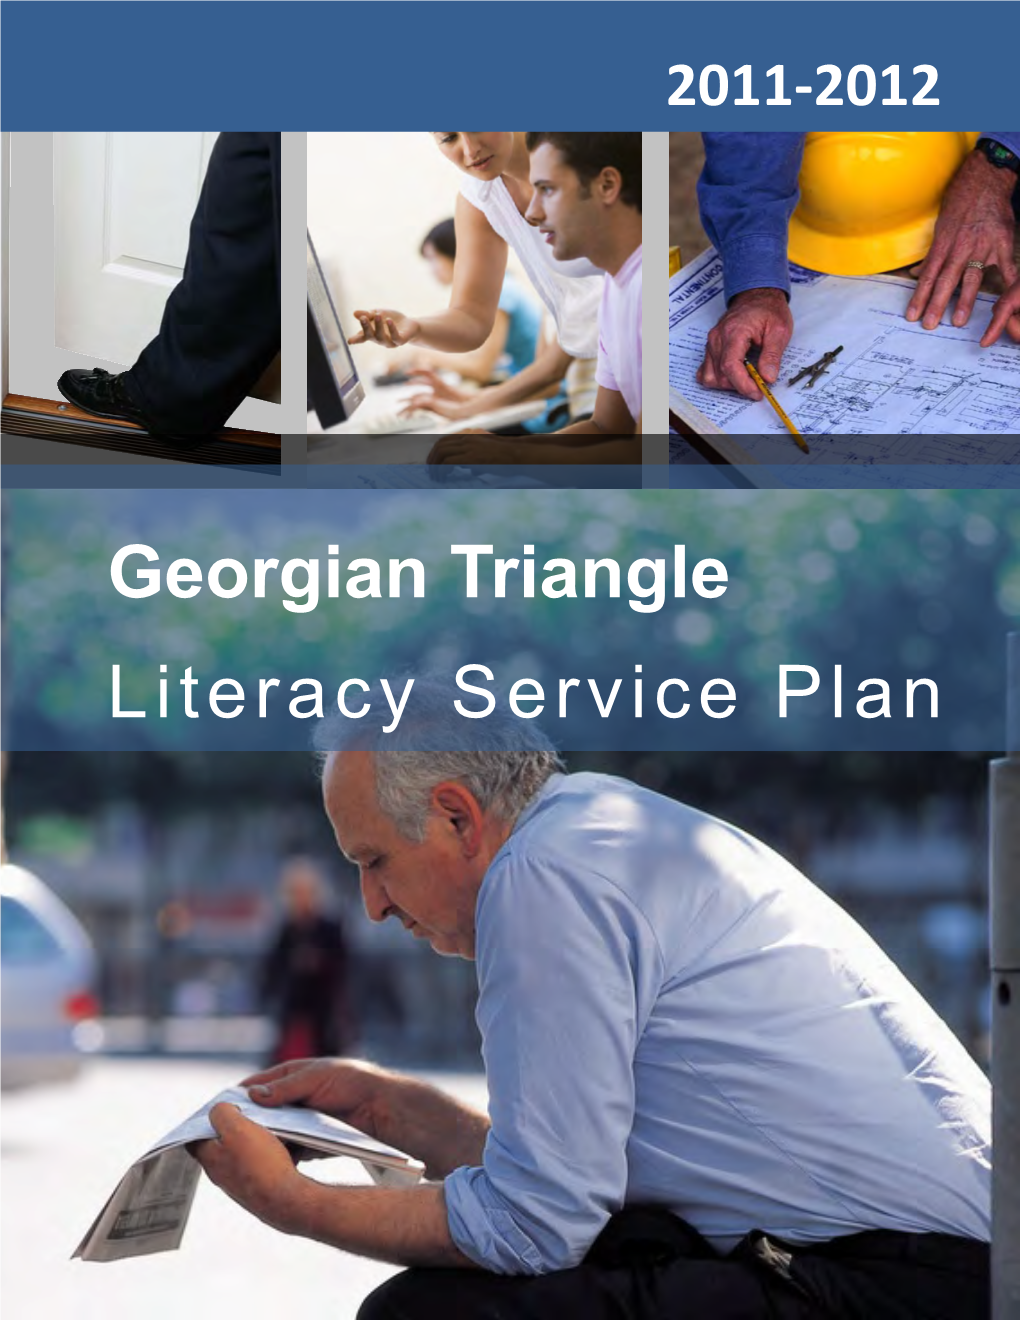 Georgian Triangle Literacy Service Plan